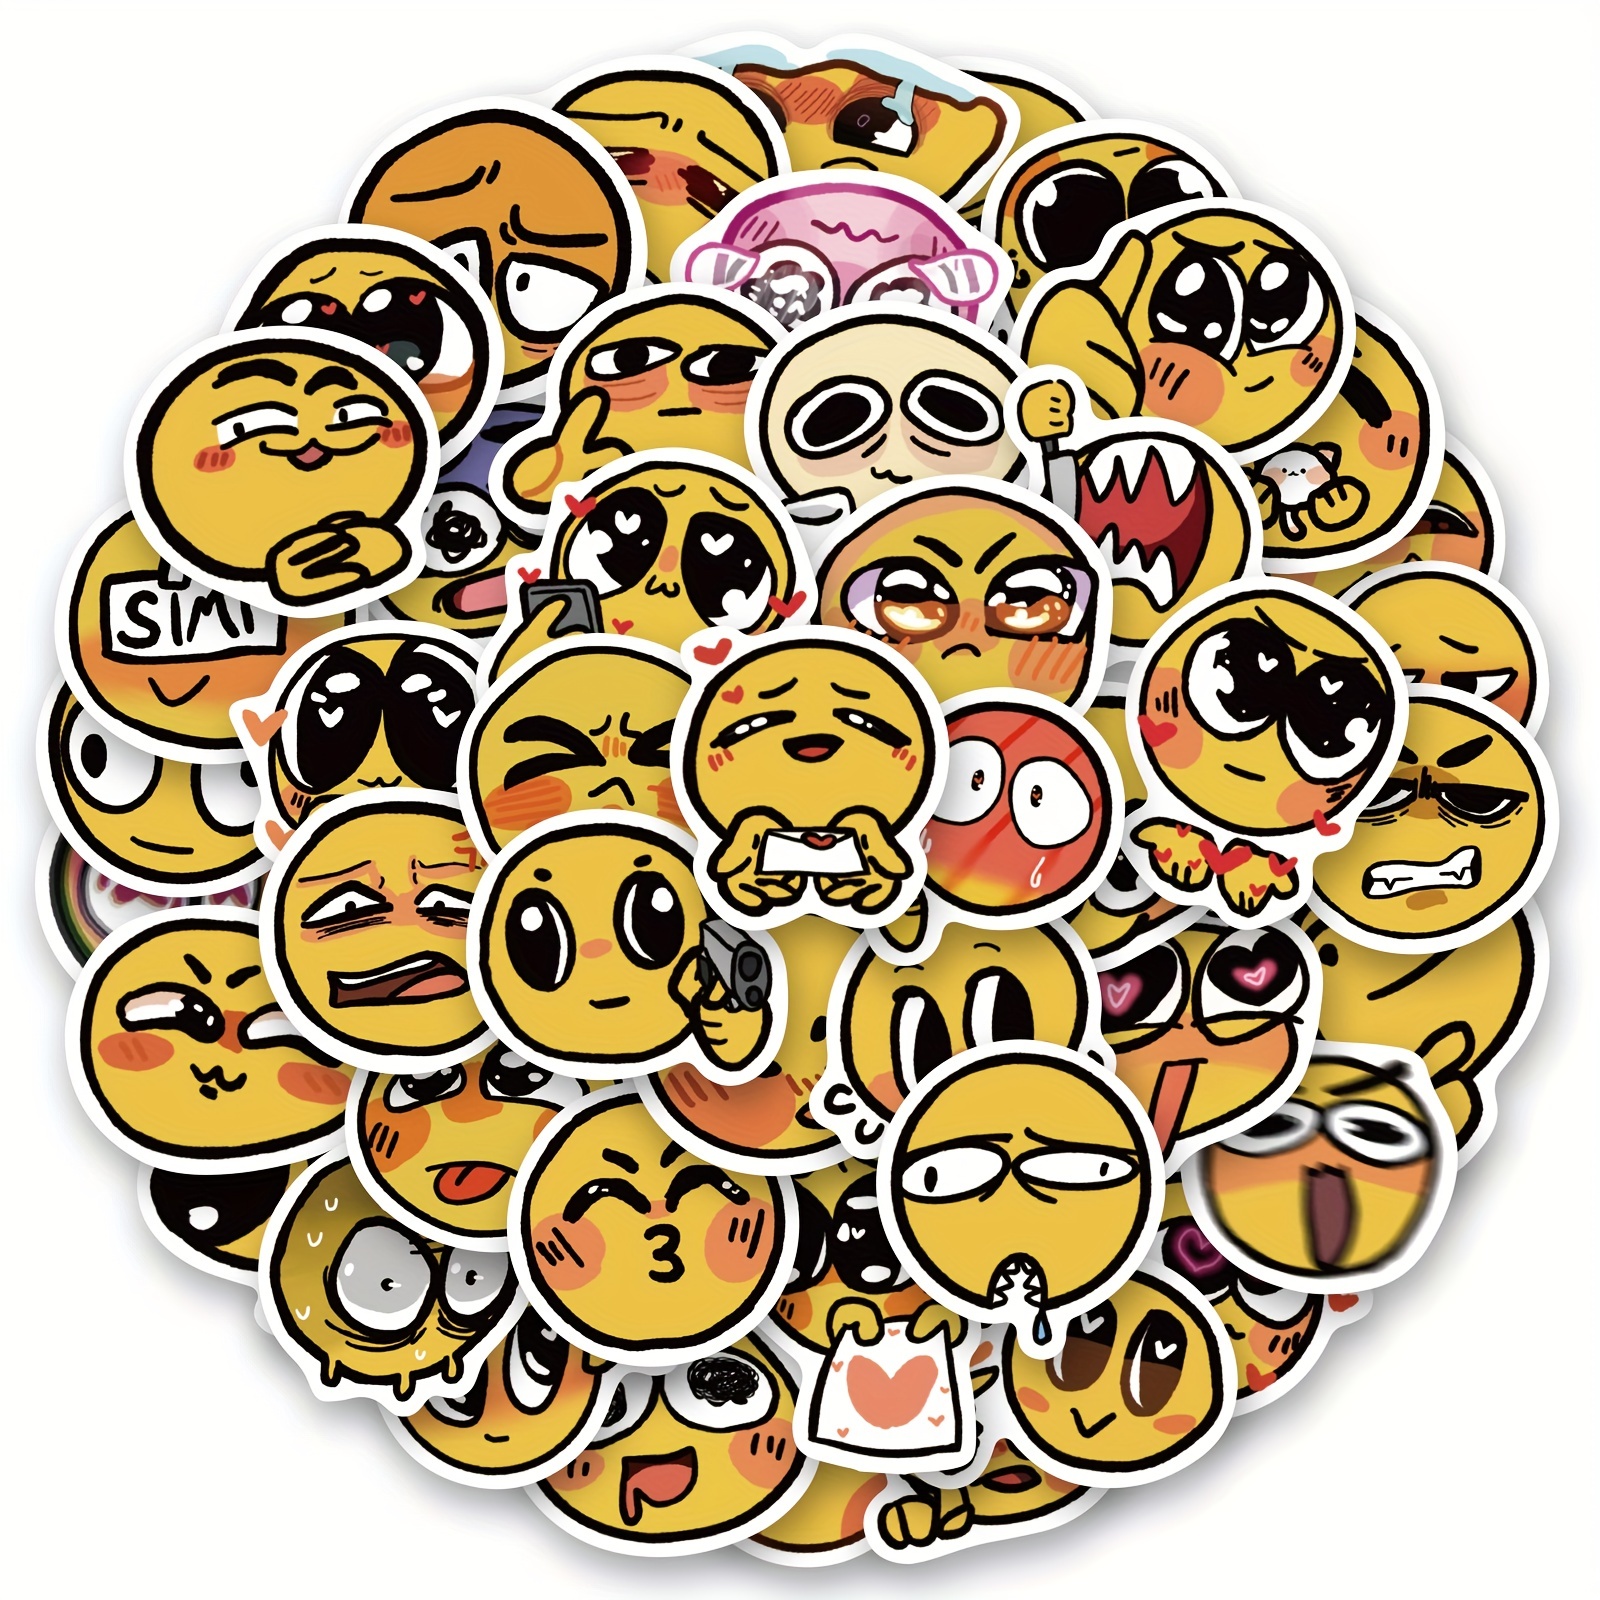 I made a cursed emoji with Skid